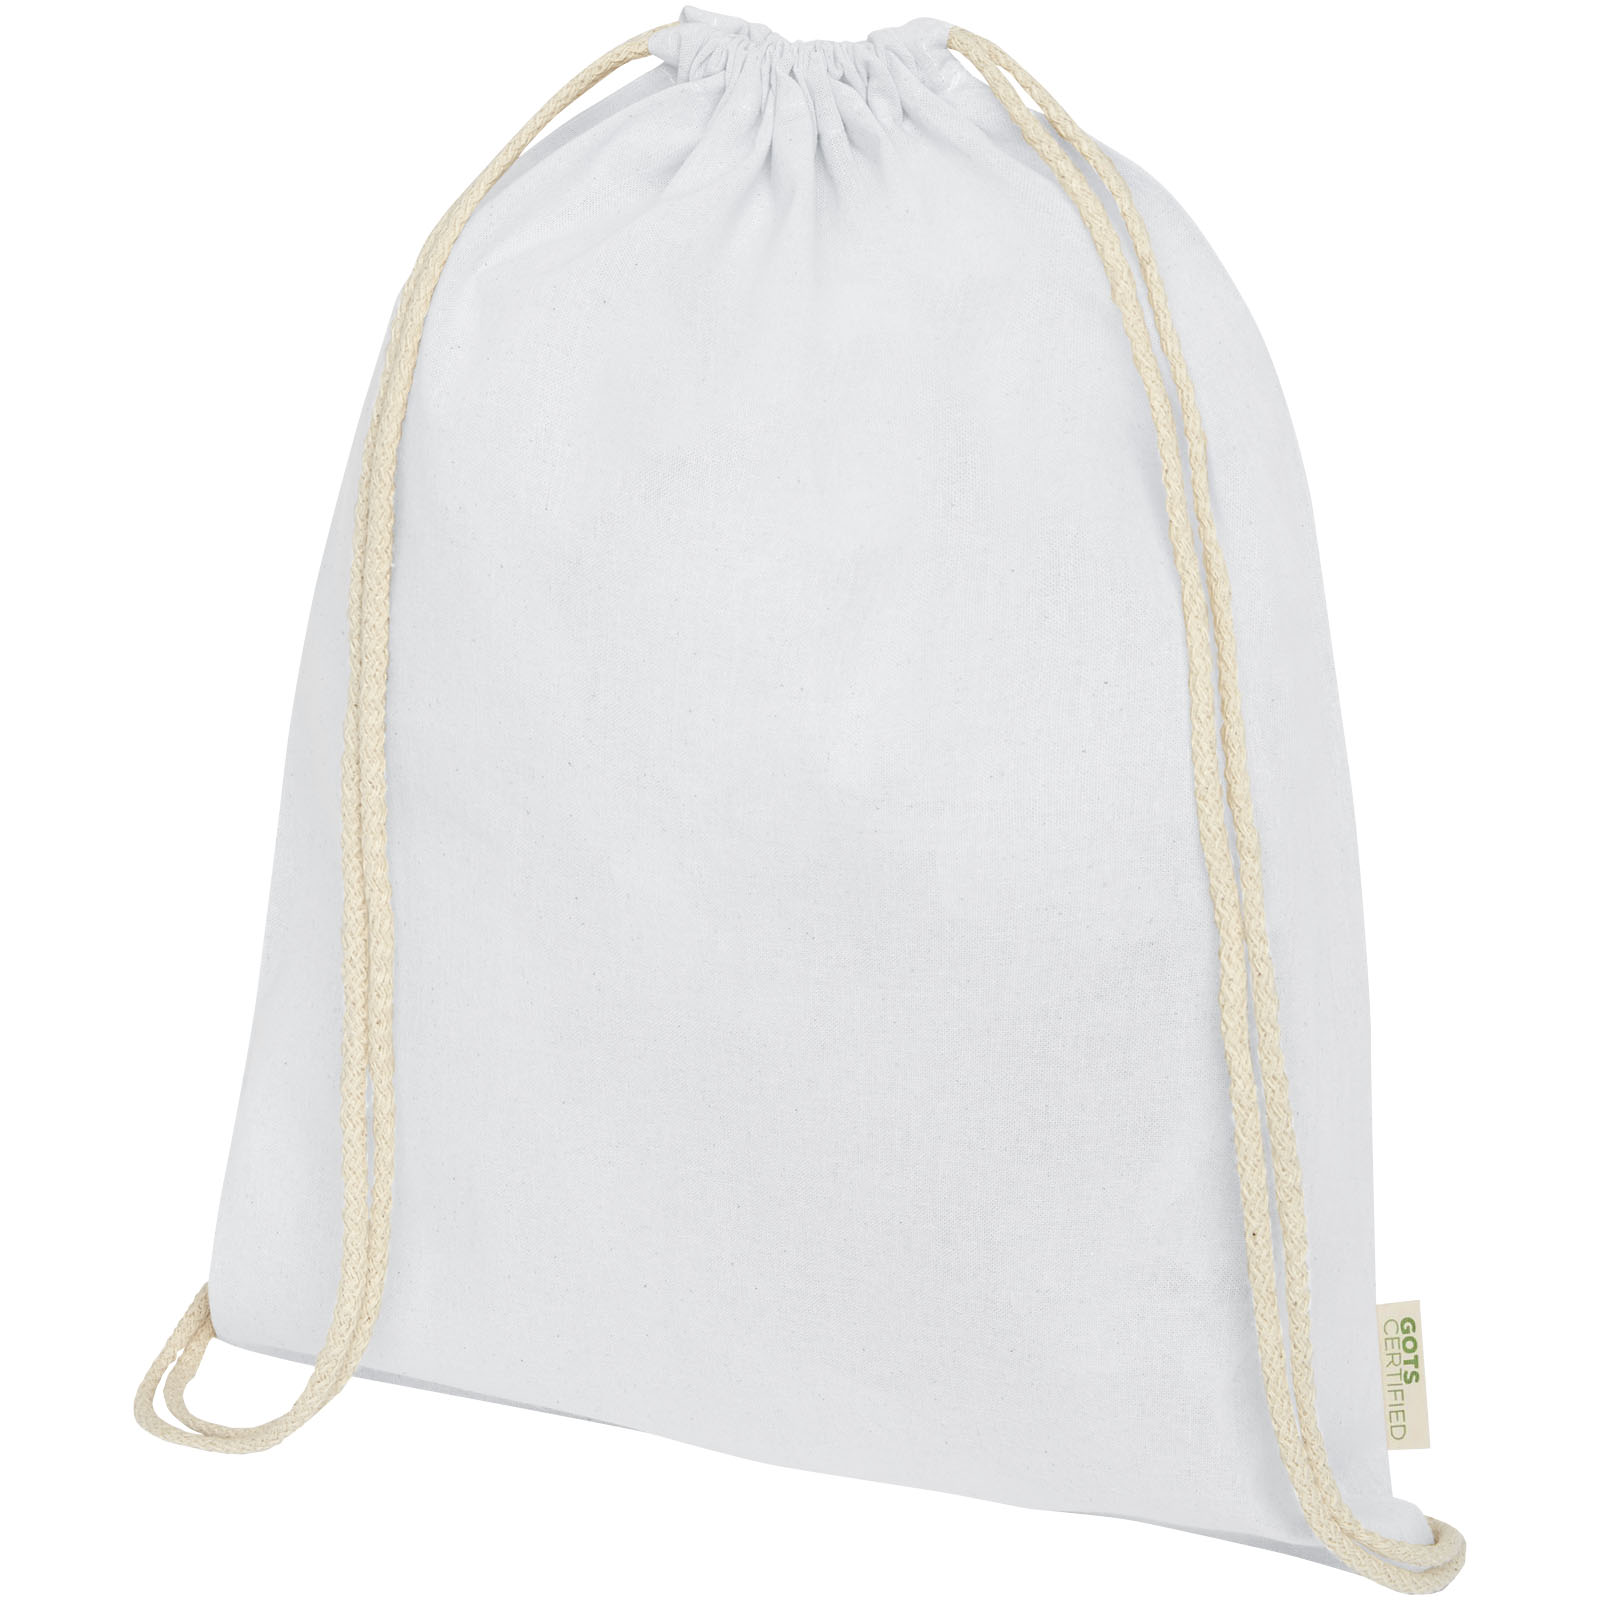 Drawstring Bags - Orissa 140 g/m² GOTS organic cotton drawstring bag 5L